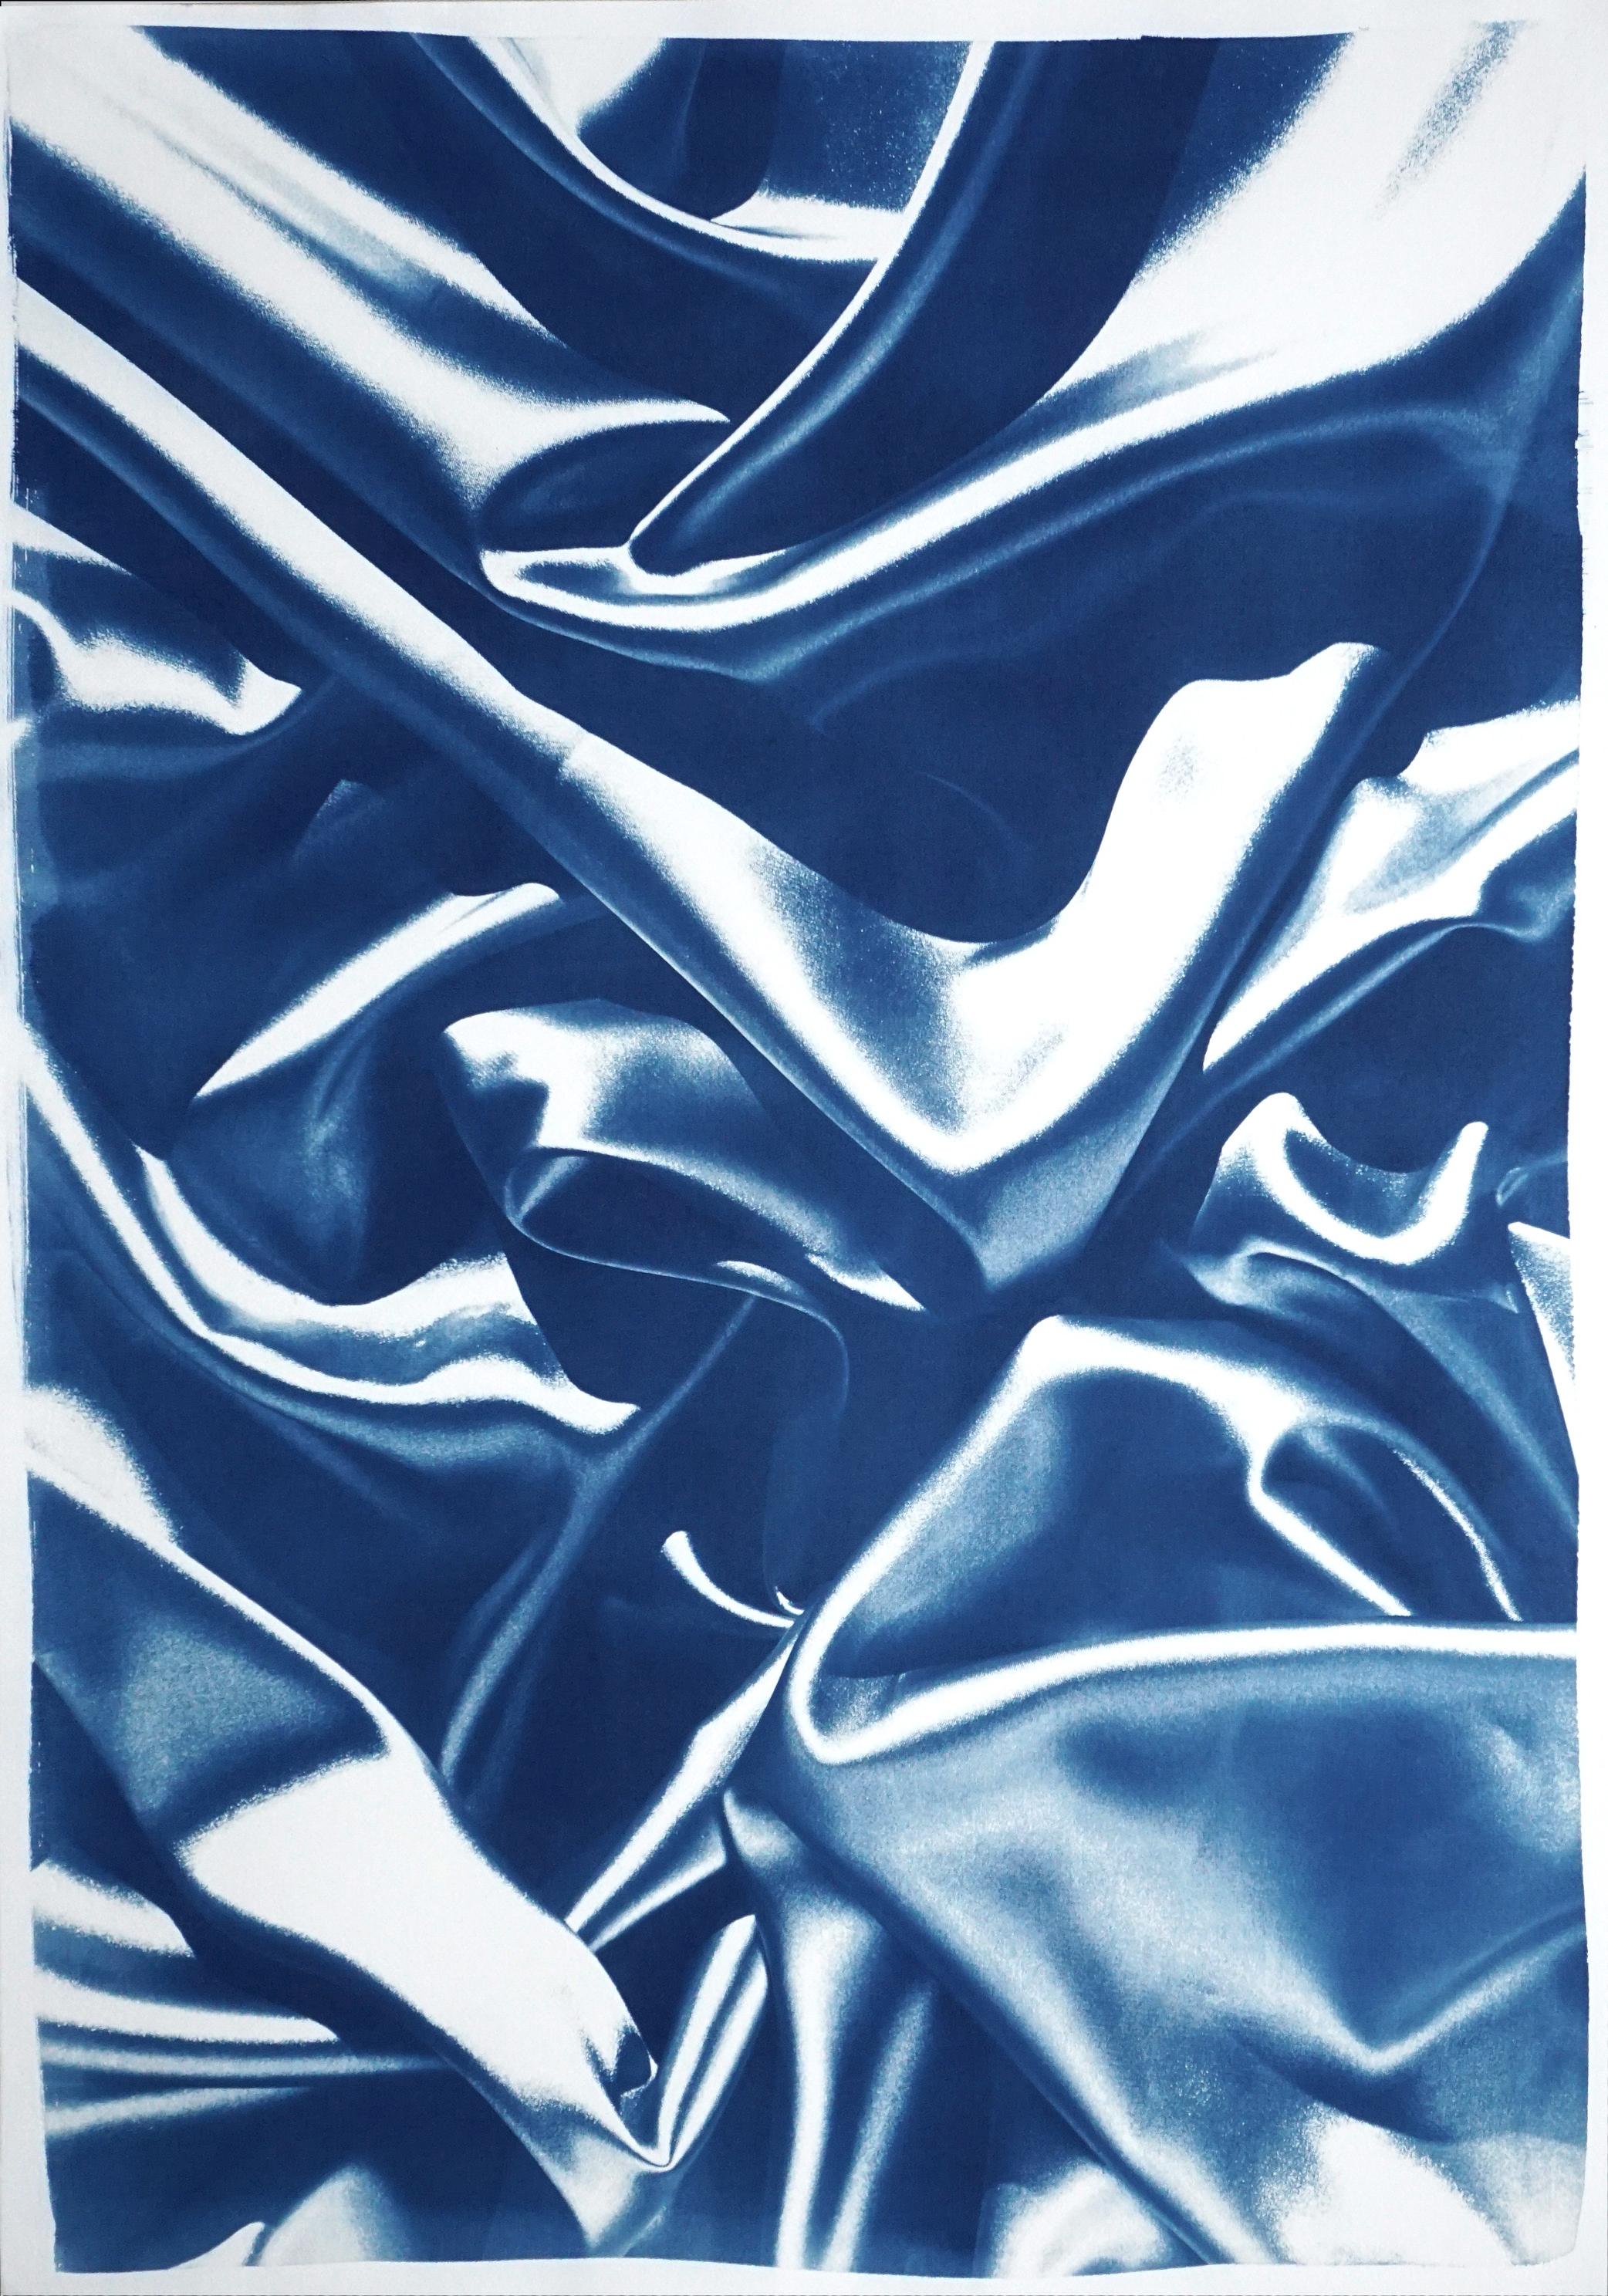 Skulpturaler Marmor in klassischem Blau, extra großer Zyanotyp-Druck, Abstrakte Seide 